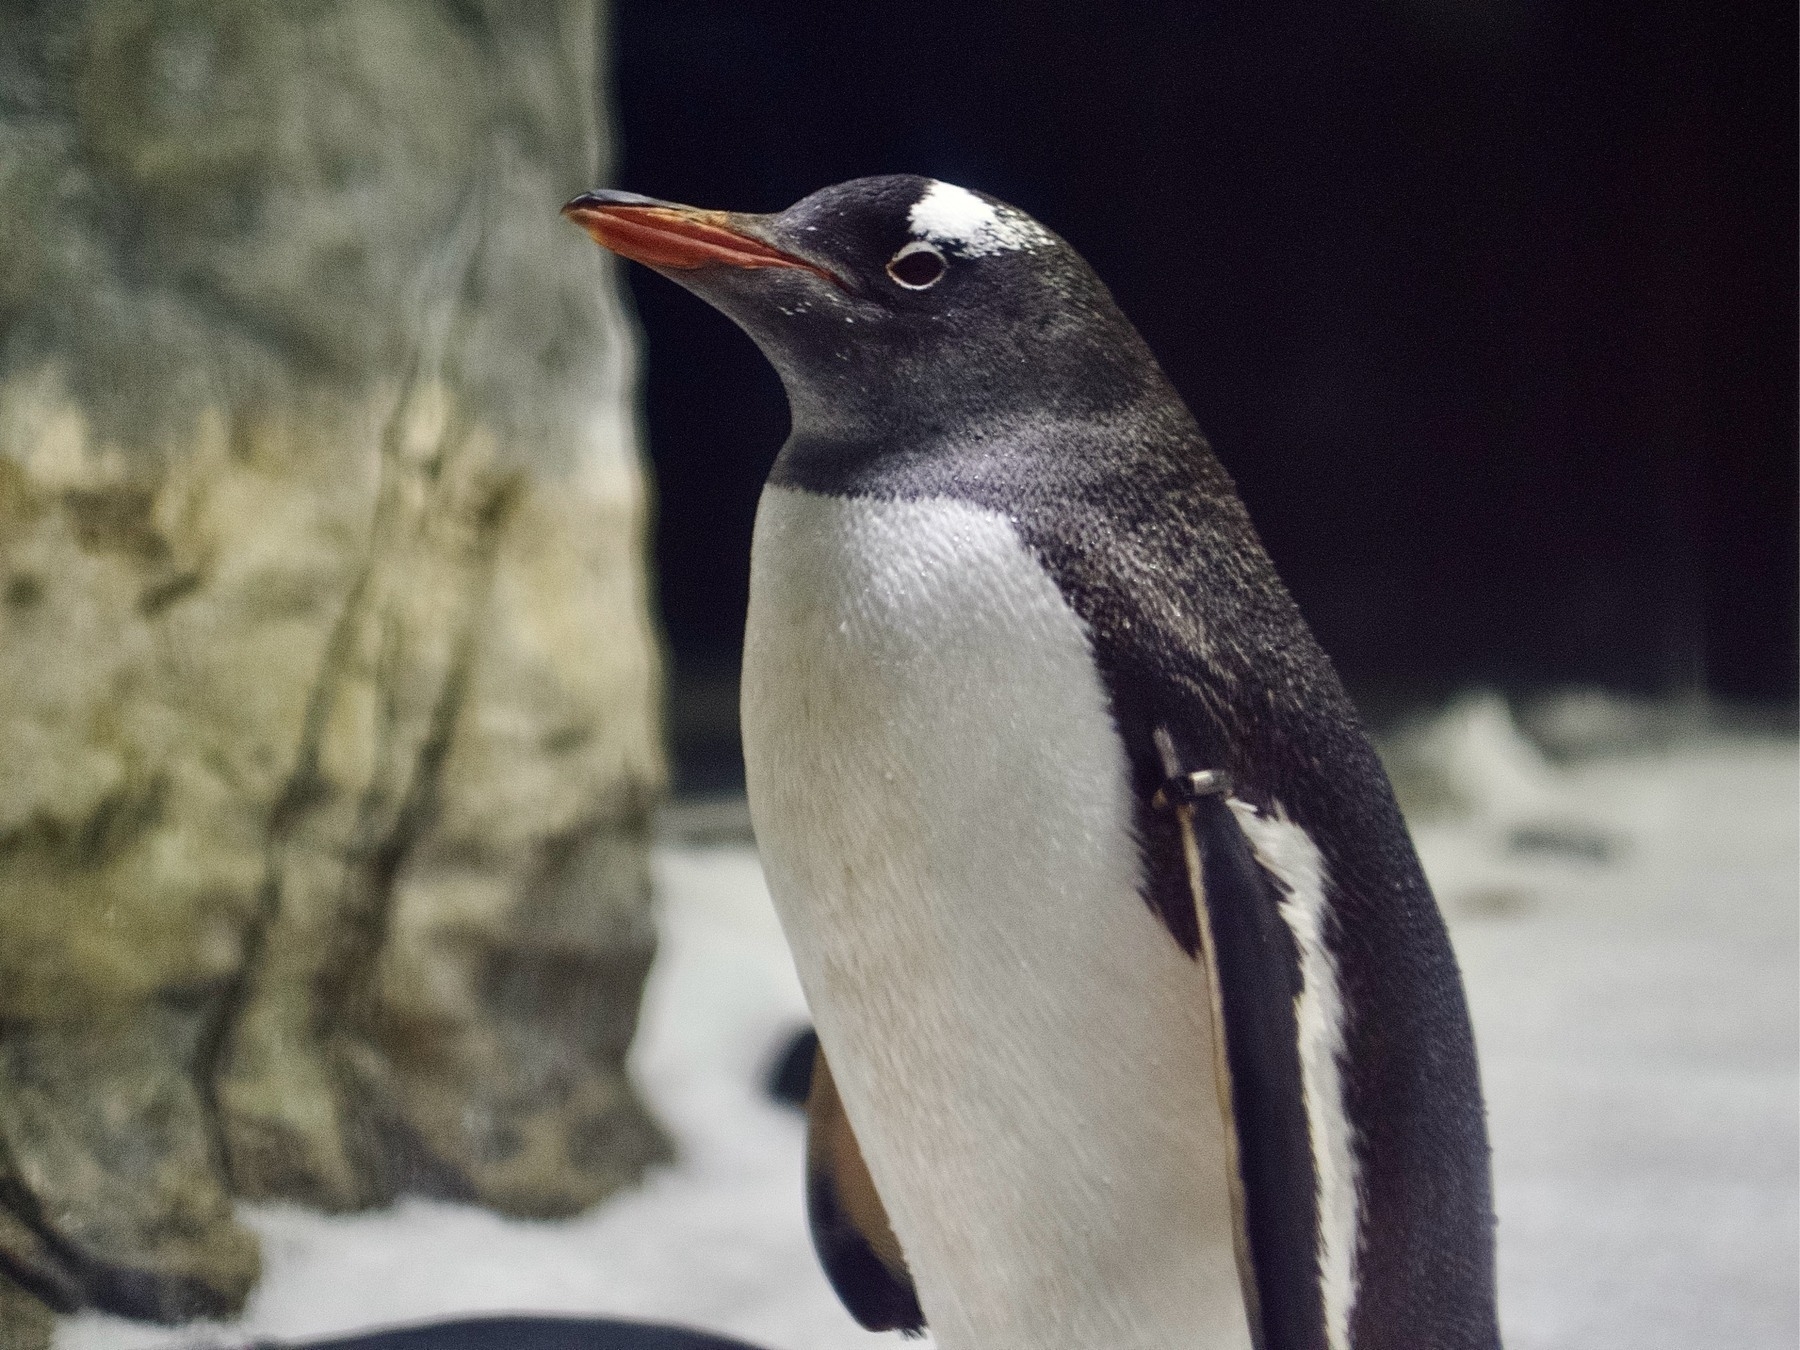 An adult little penguin